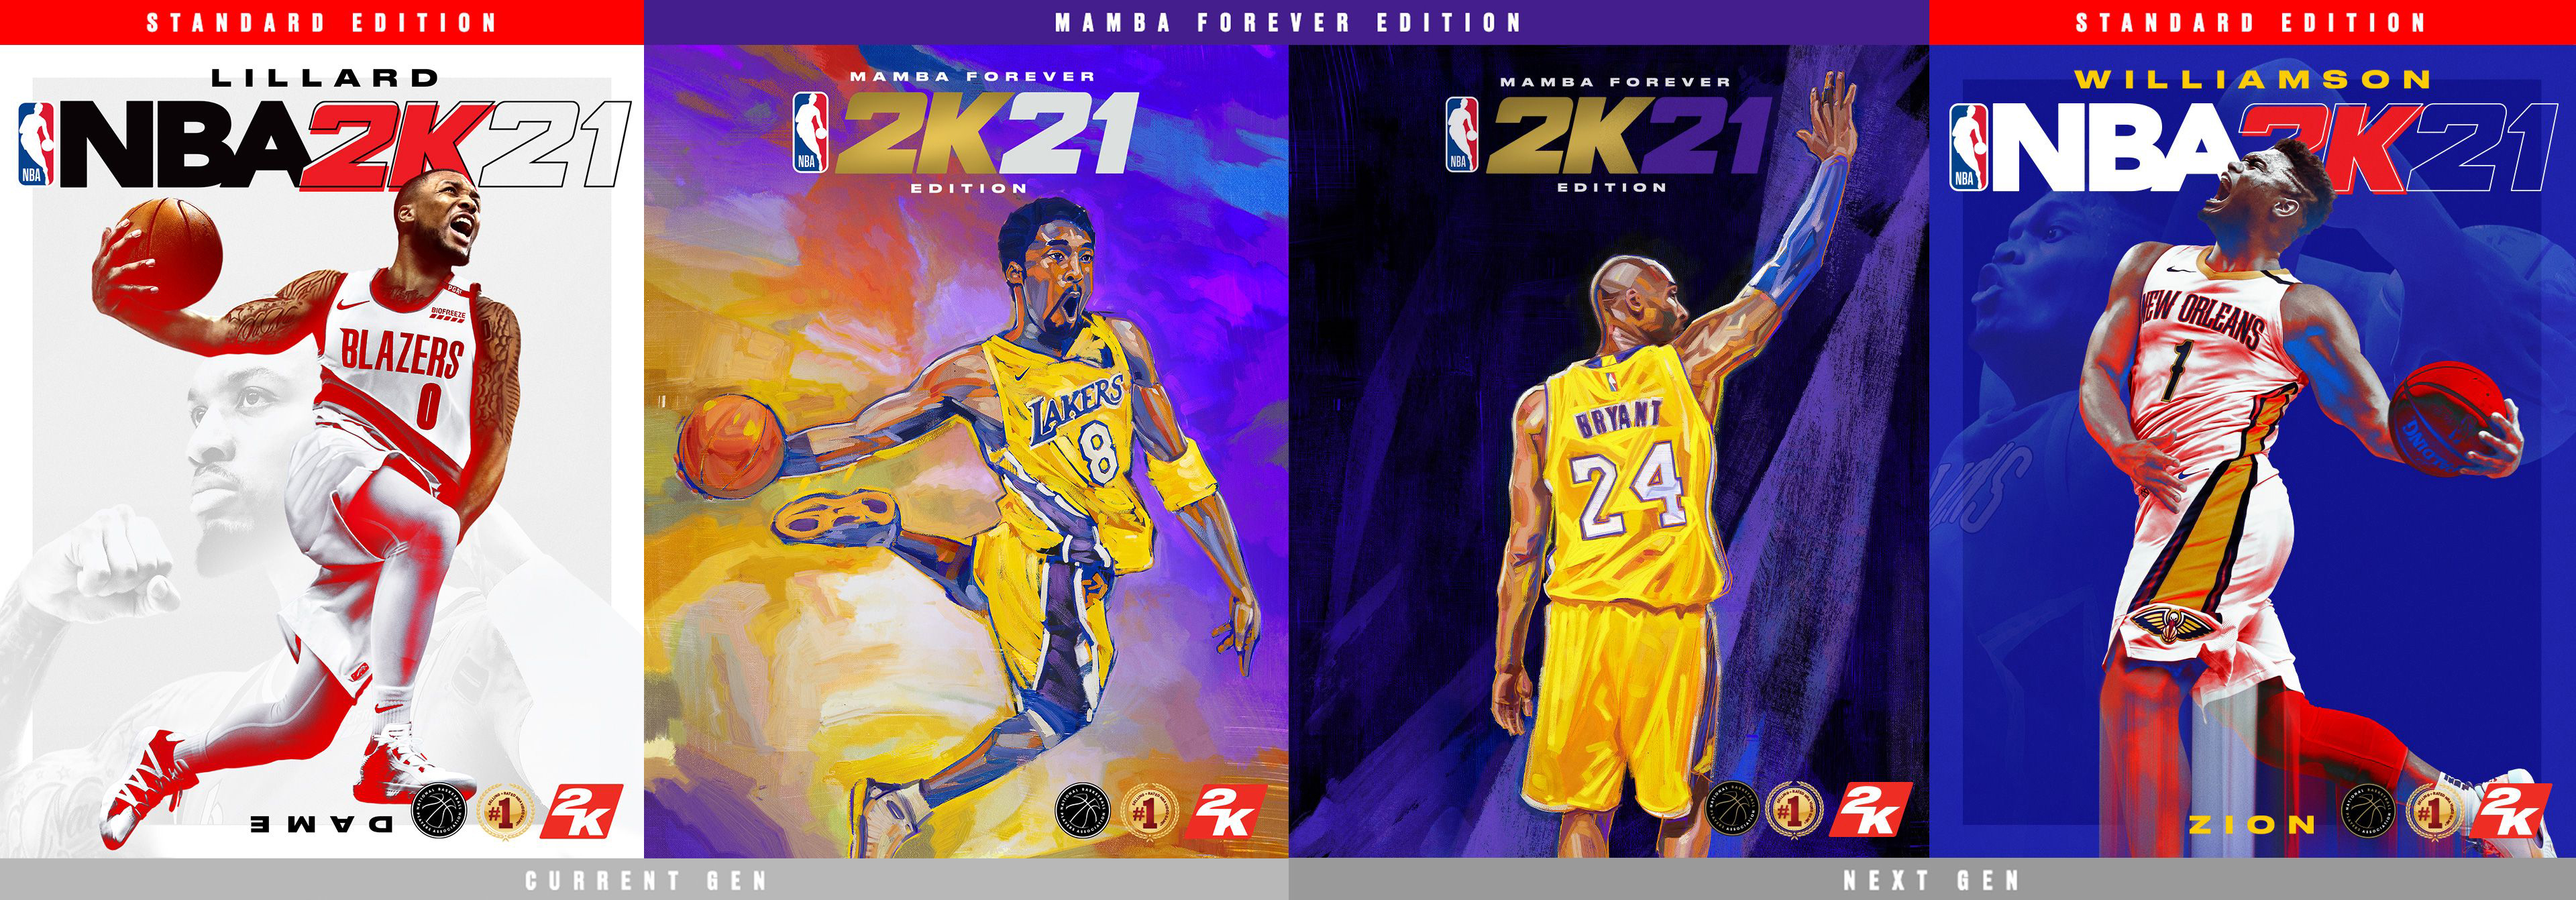 《NBA2K21》封面人物有誰 遊戲封面球星介紹